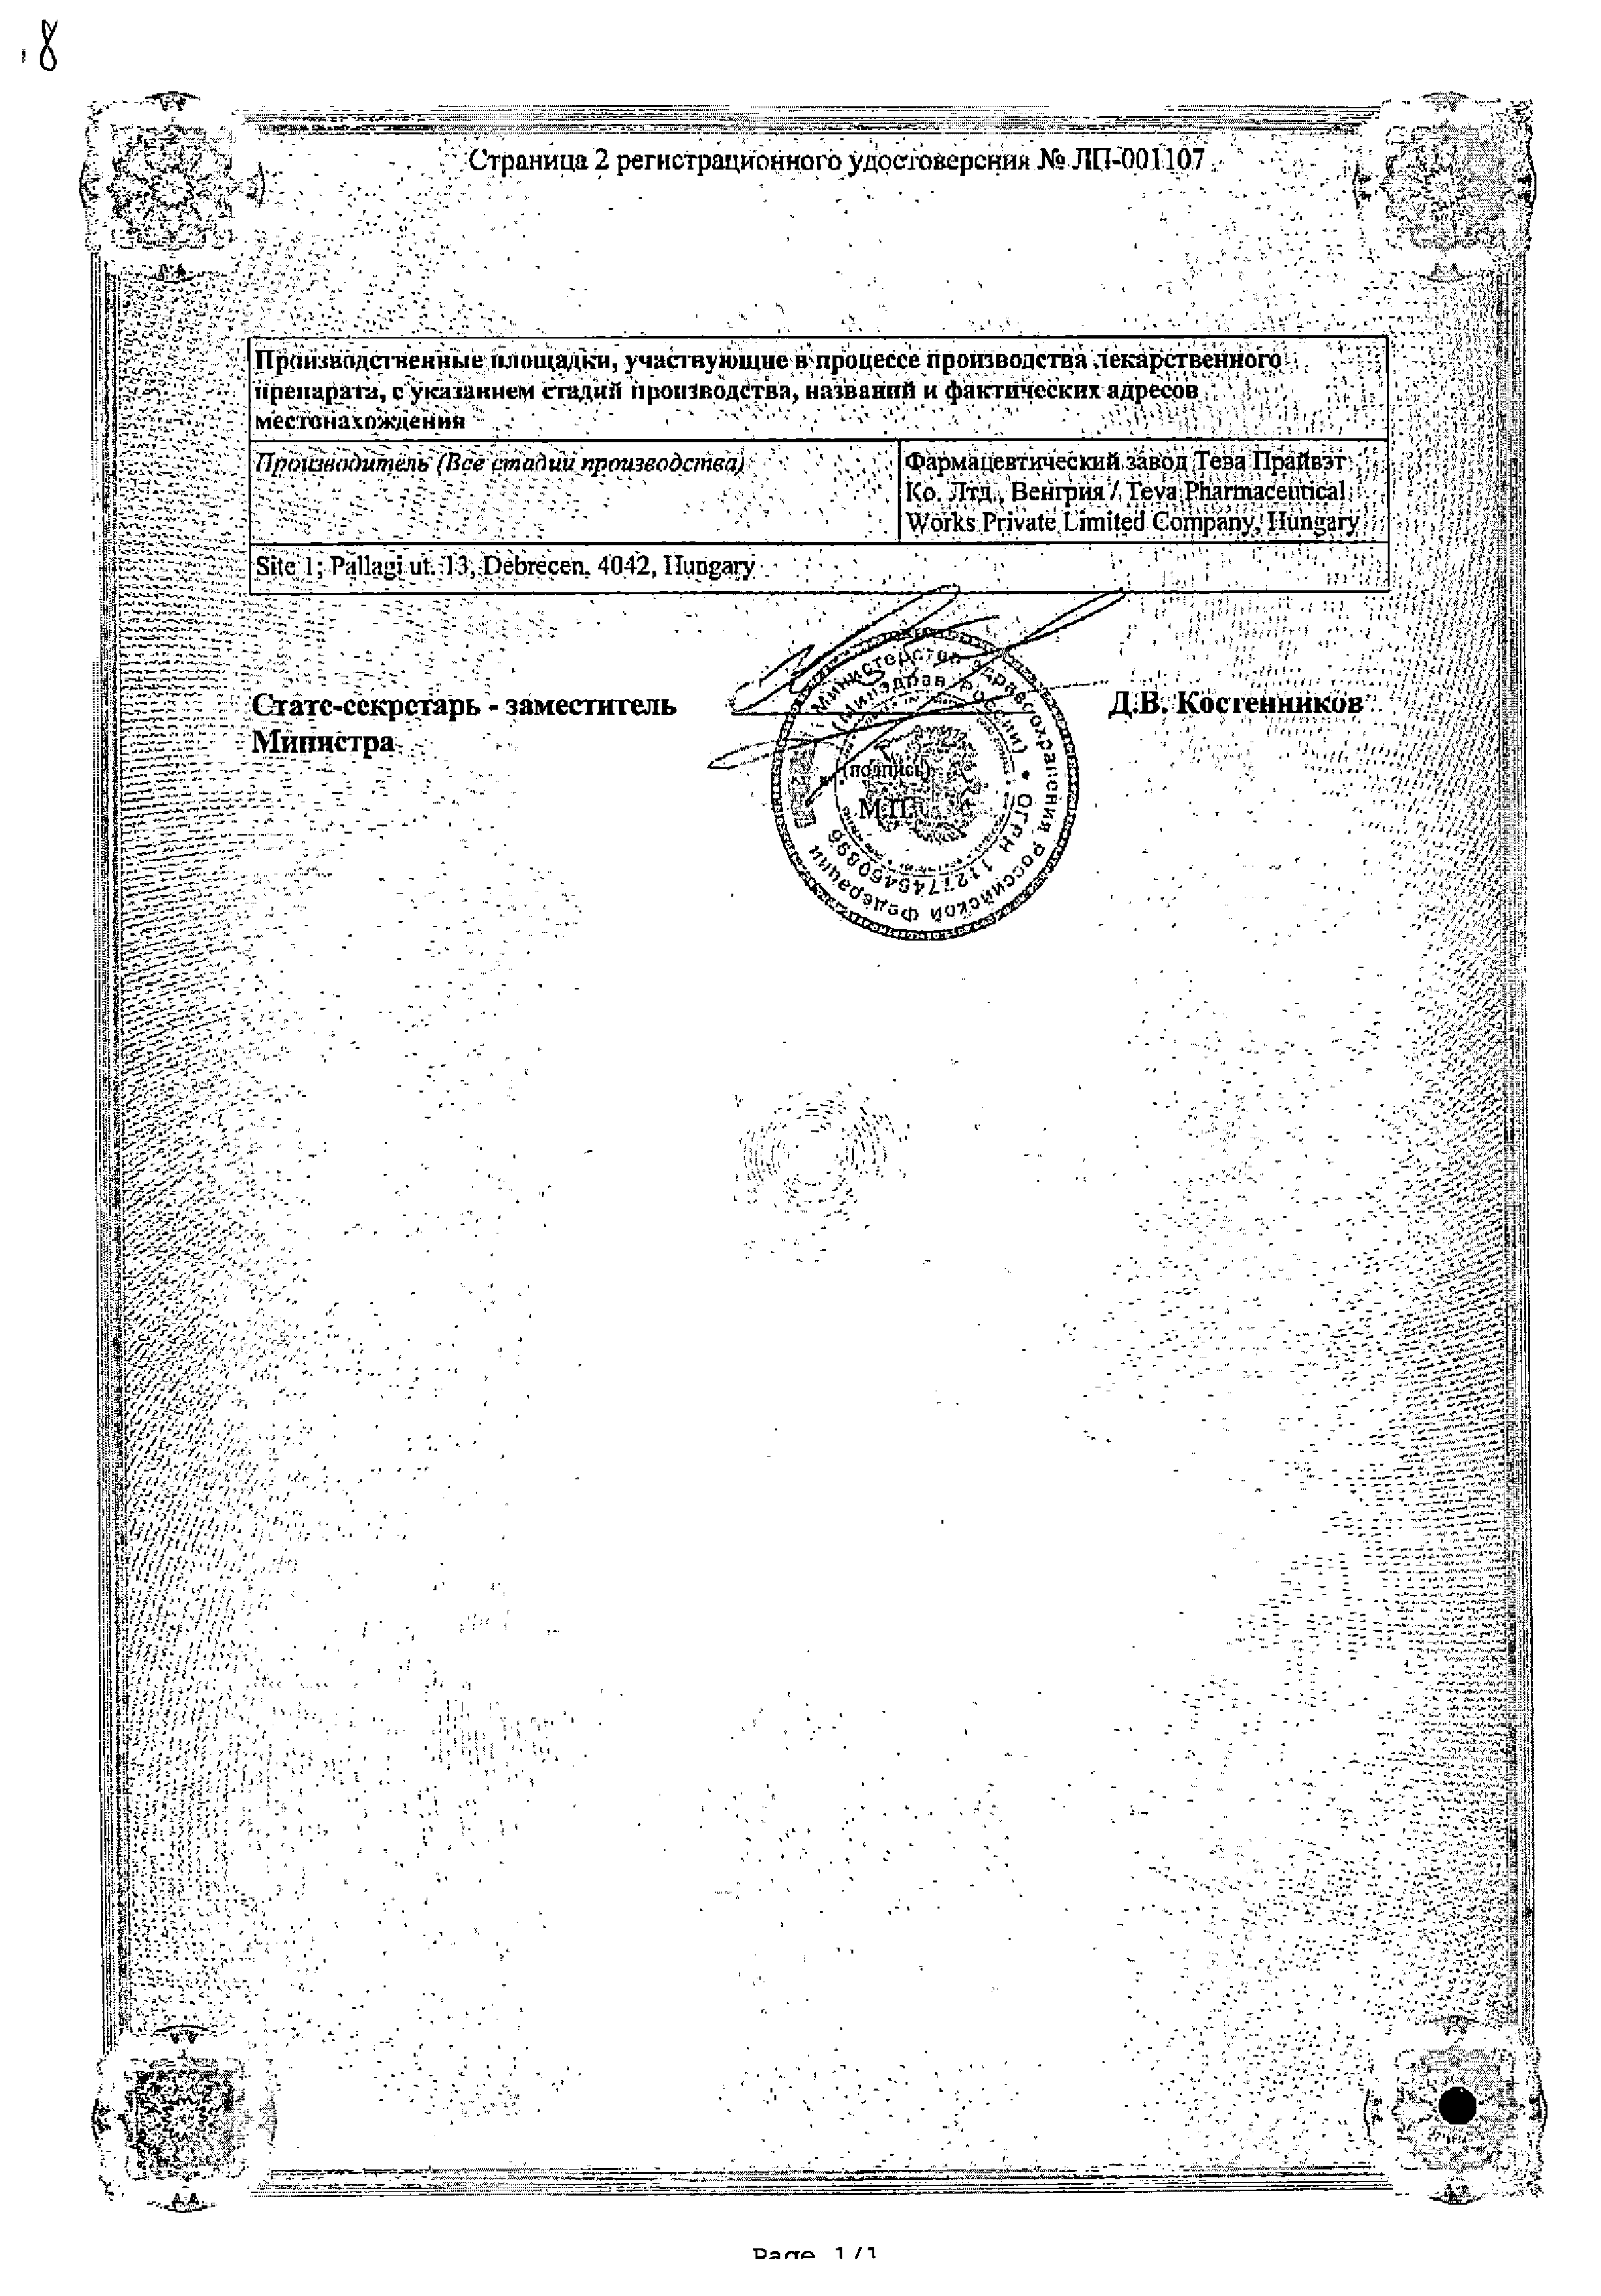 Суматриптан-Тева сертификат